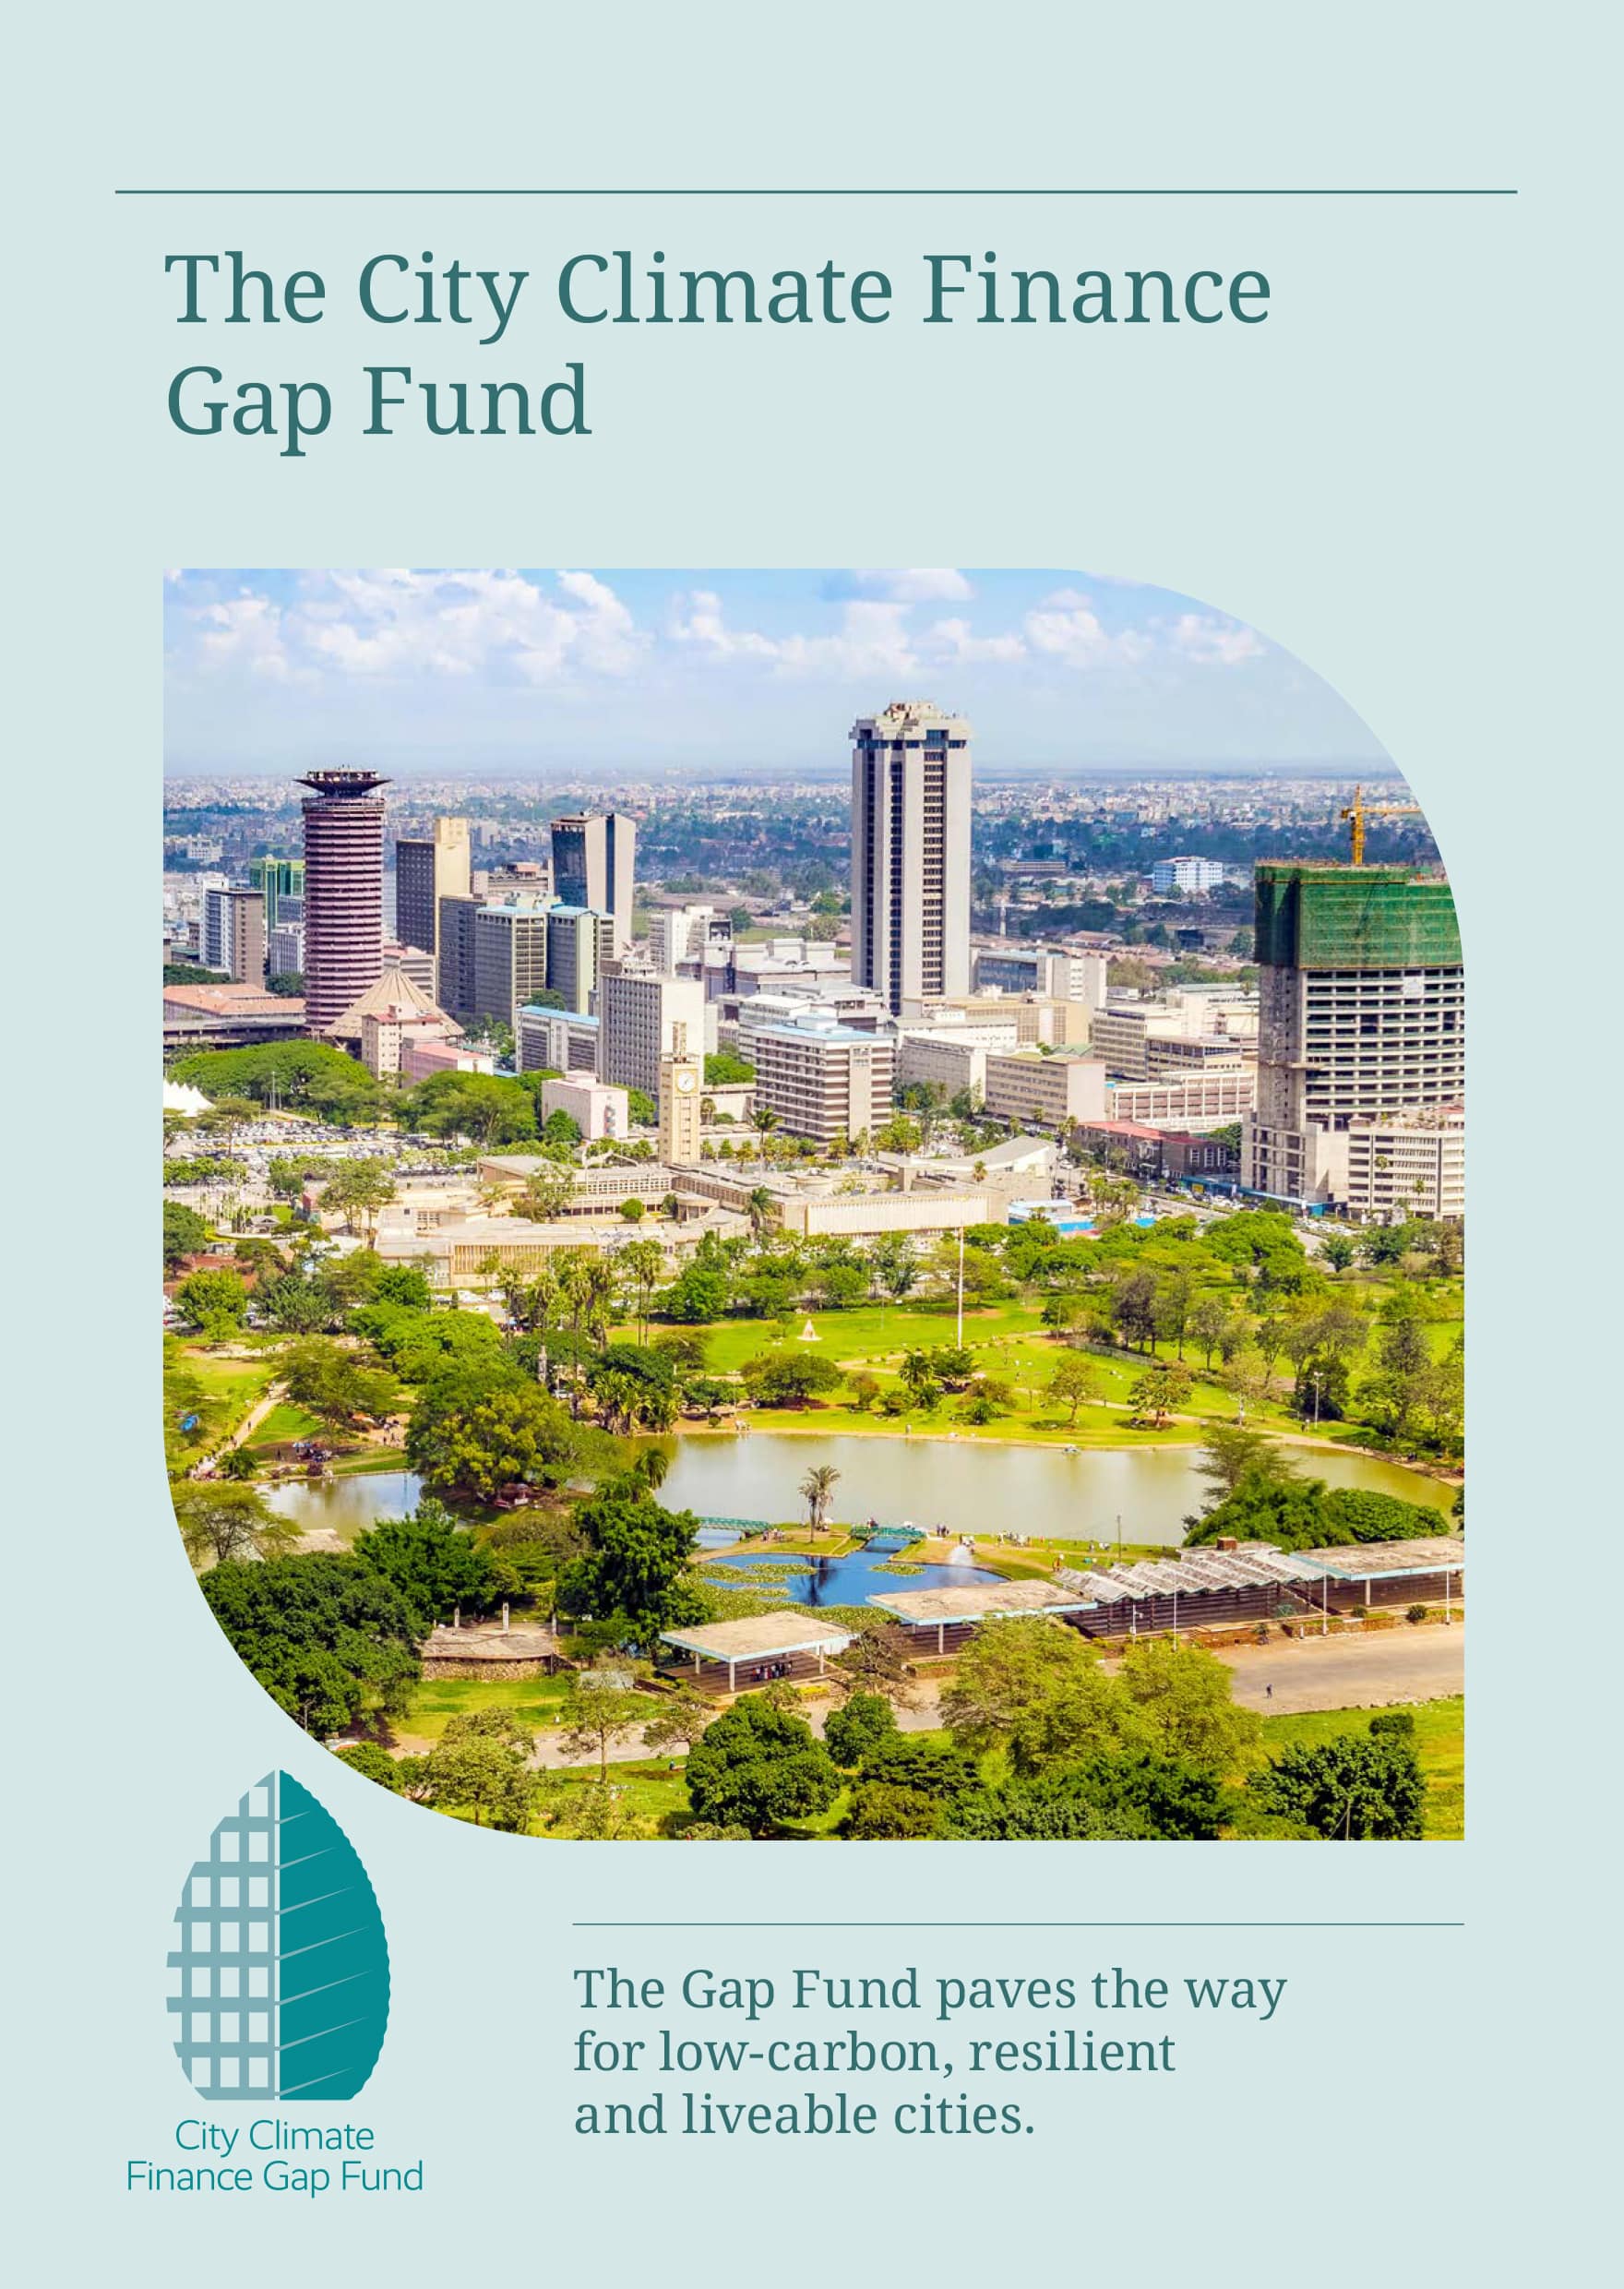 City Climate Finance Gap Fund